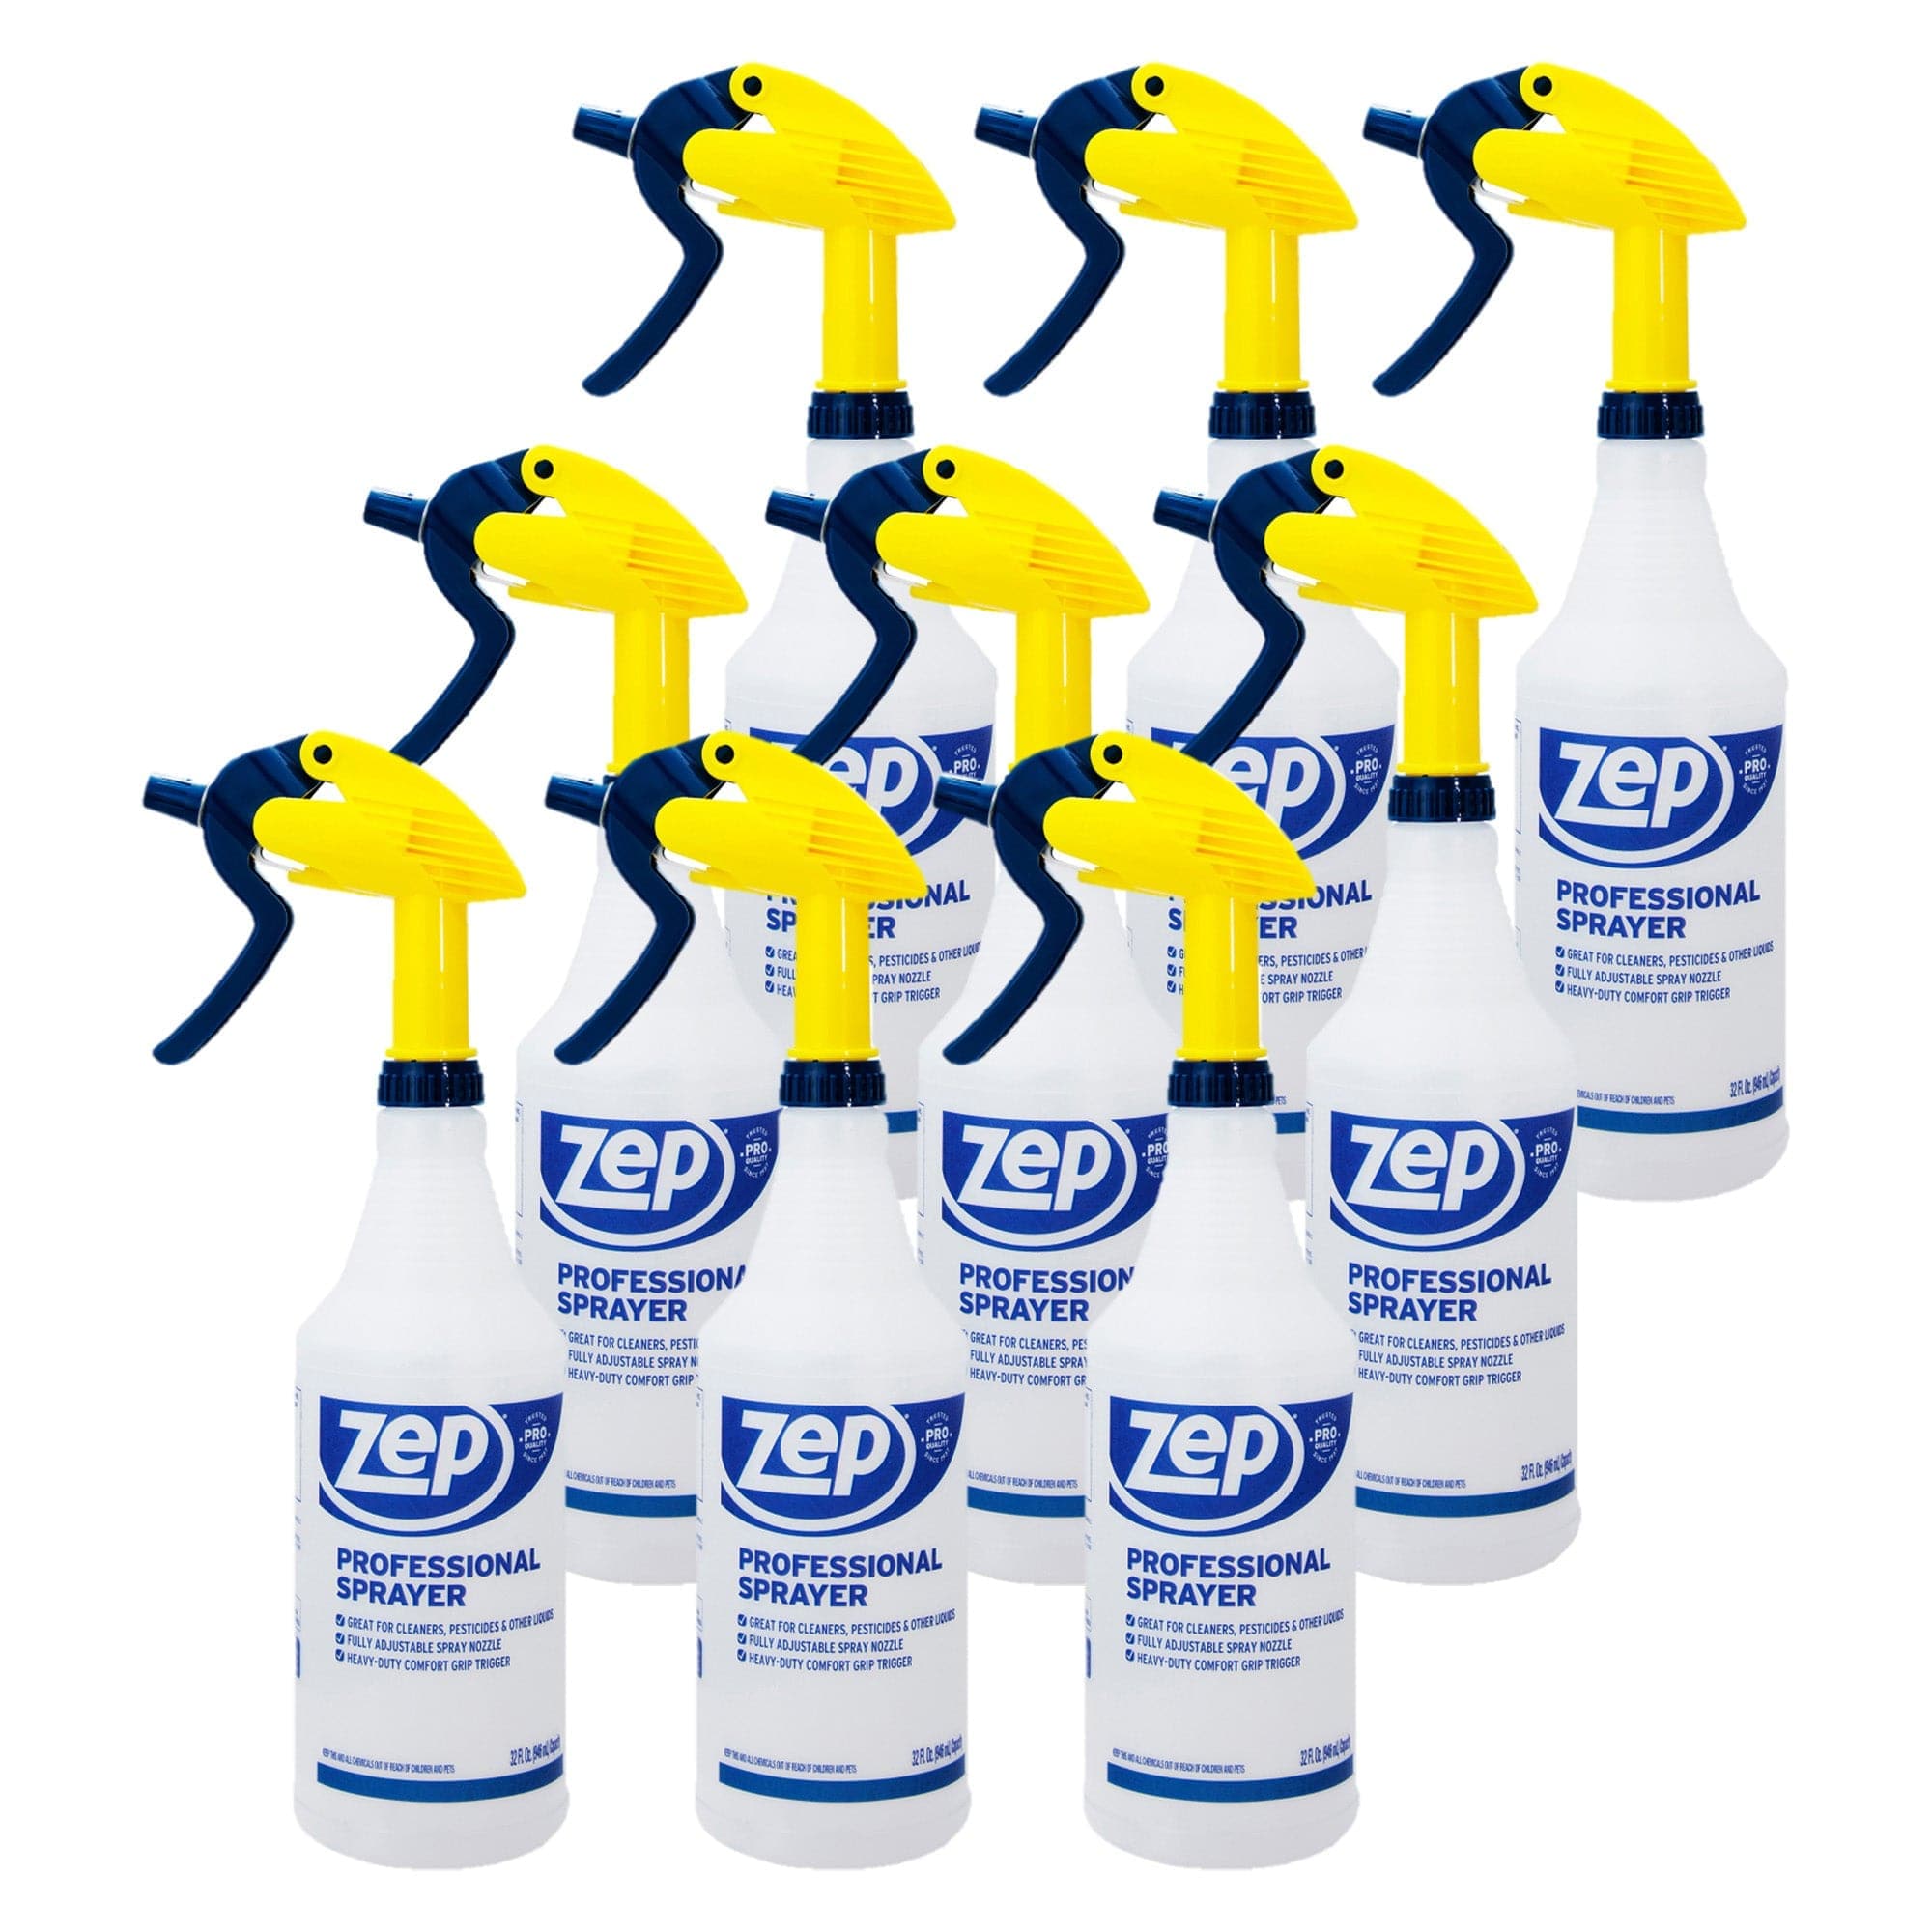 Professional Spray Bottle - 32oz